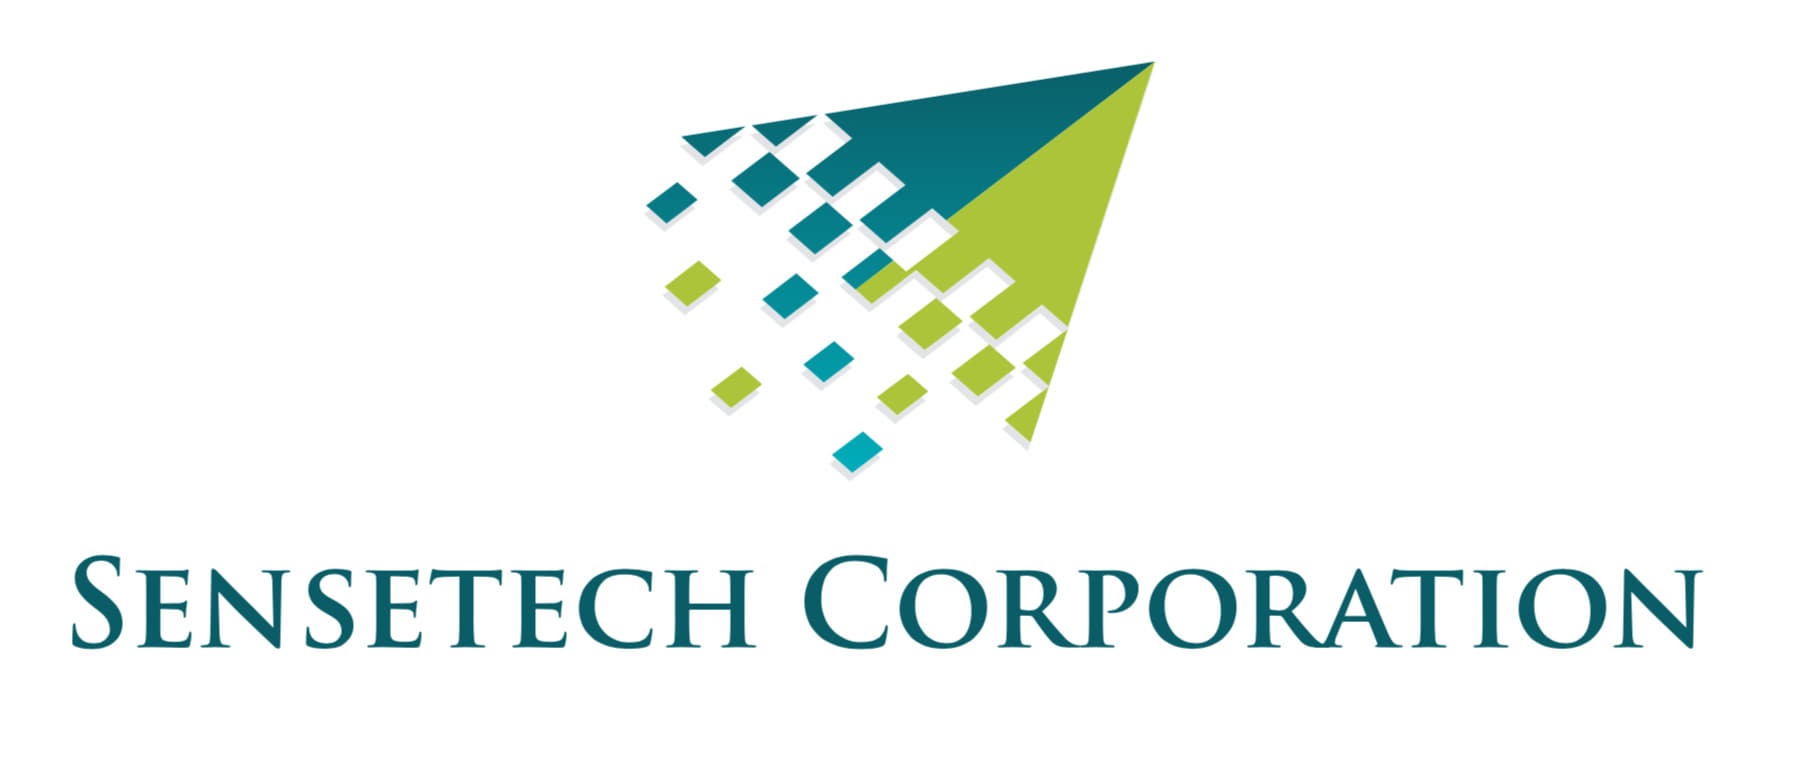 Sensetech Corporation